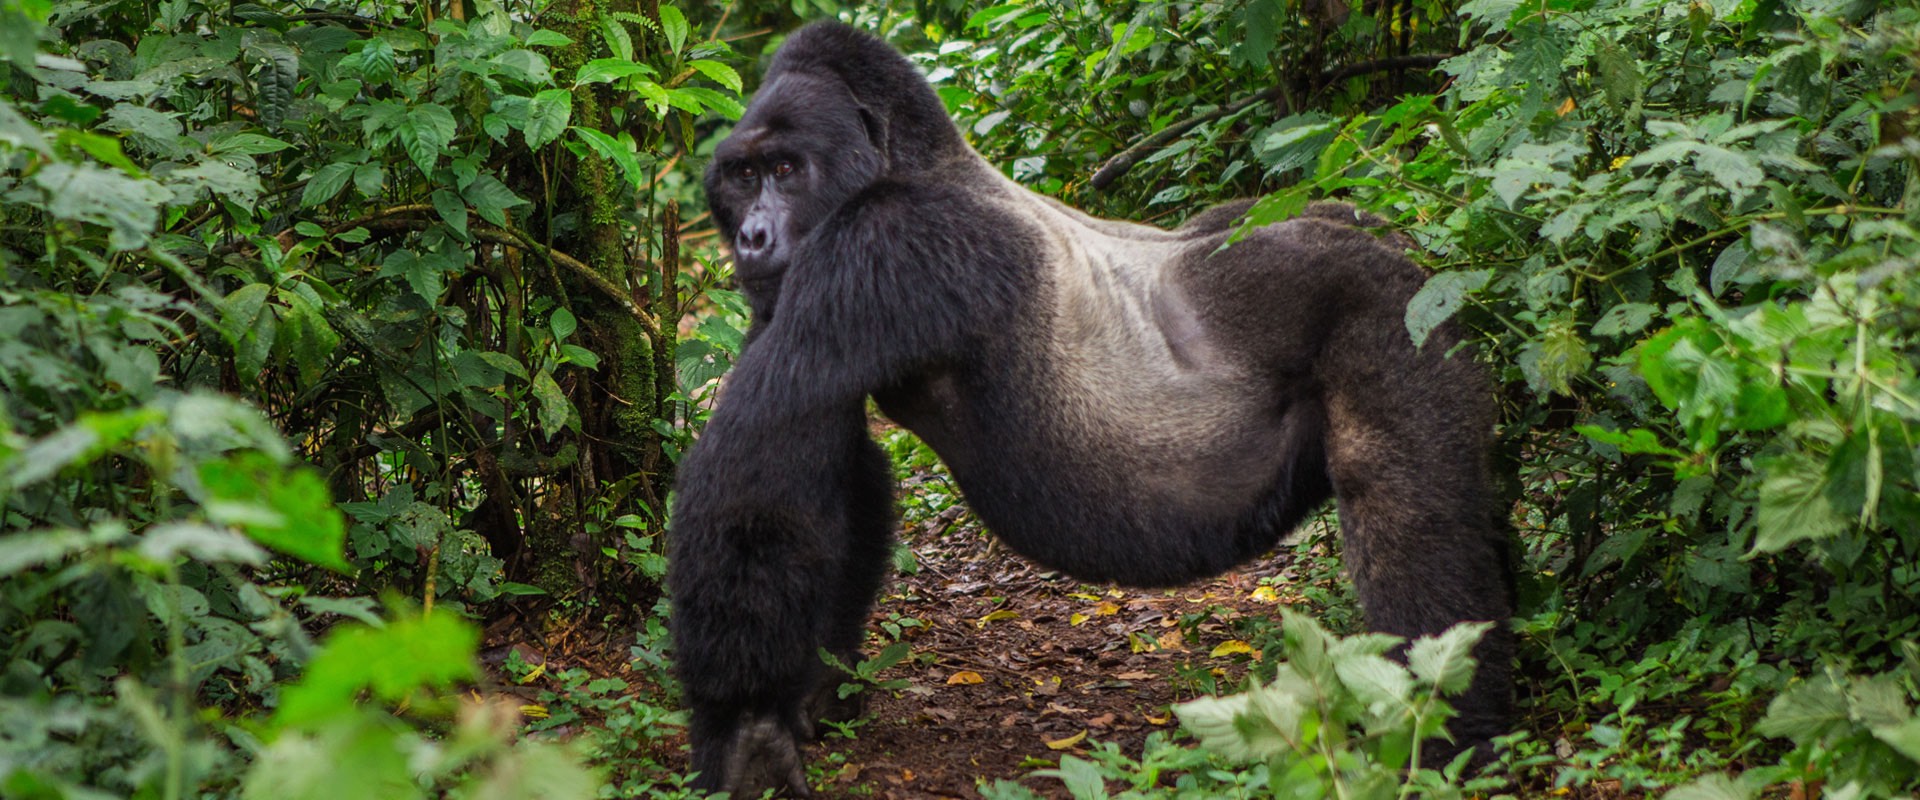 singita kwitonda luxury Gorilla Trekking Safaris Volcanoes National Park - Gorillas